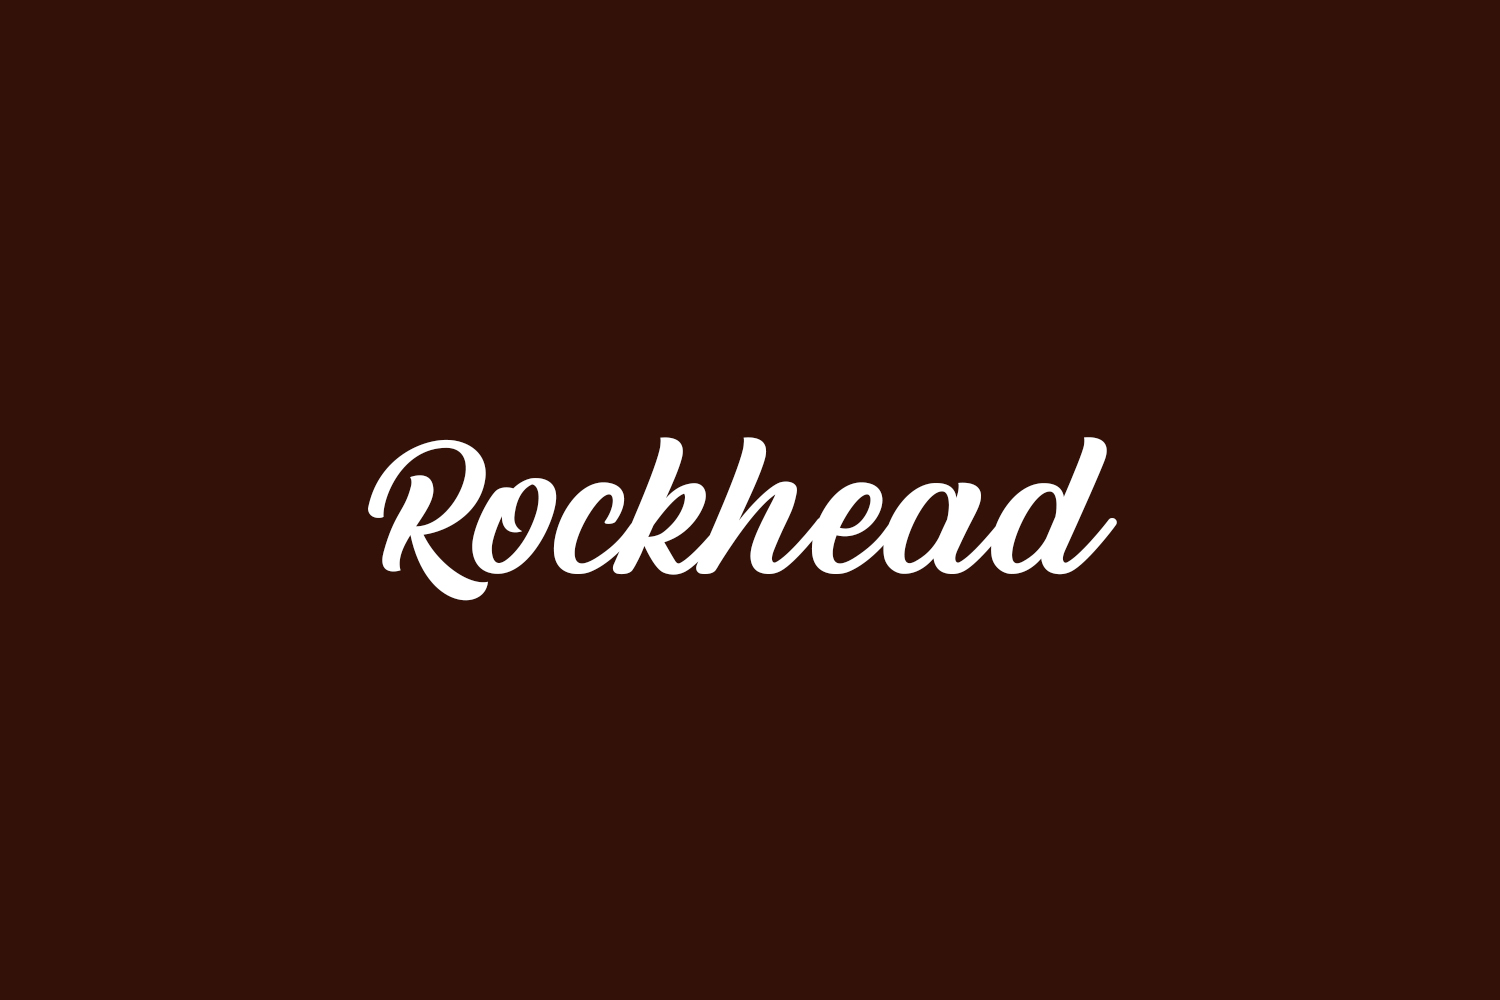 Rockhead